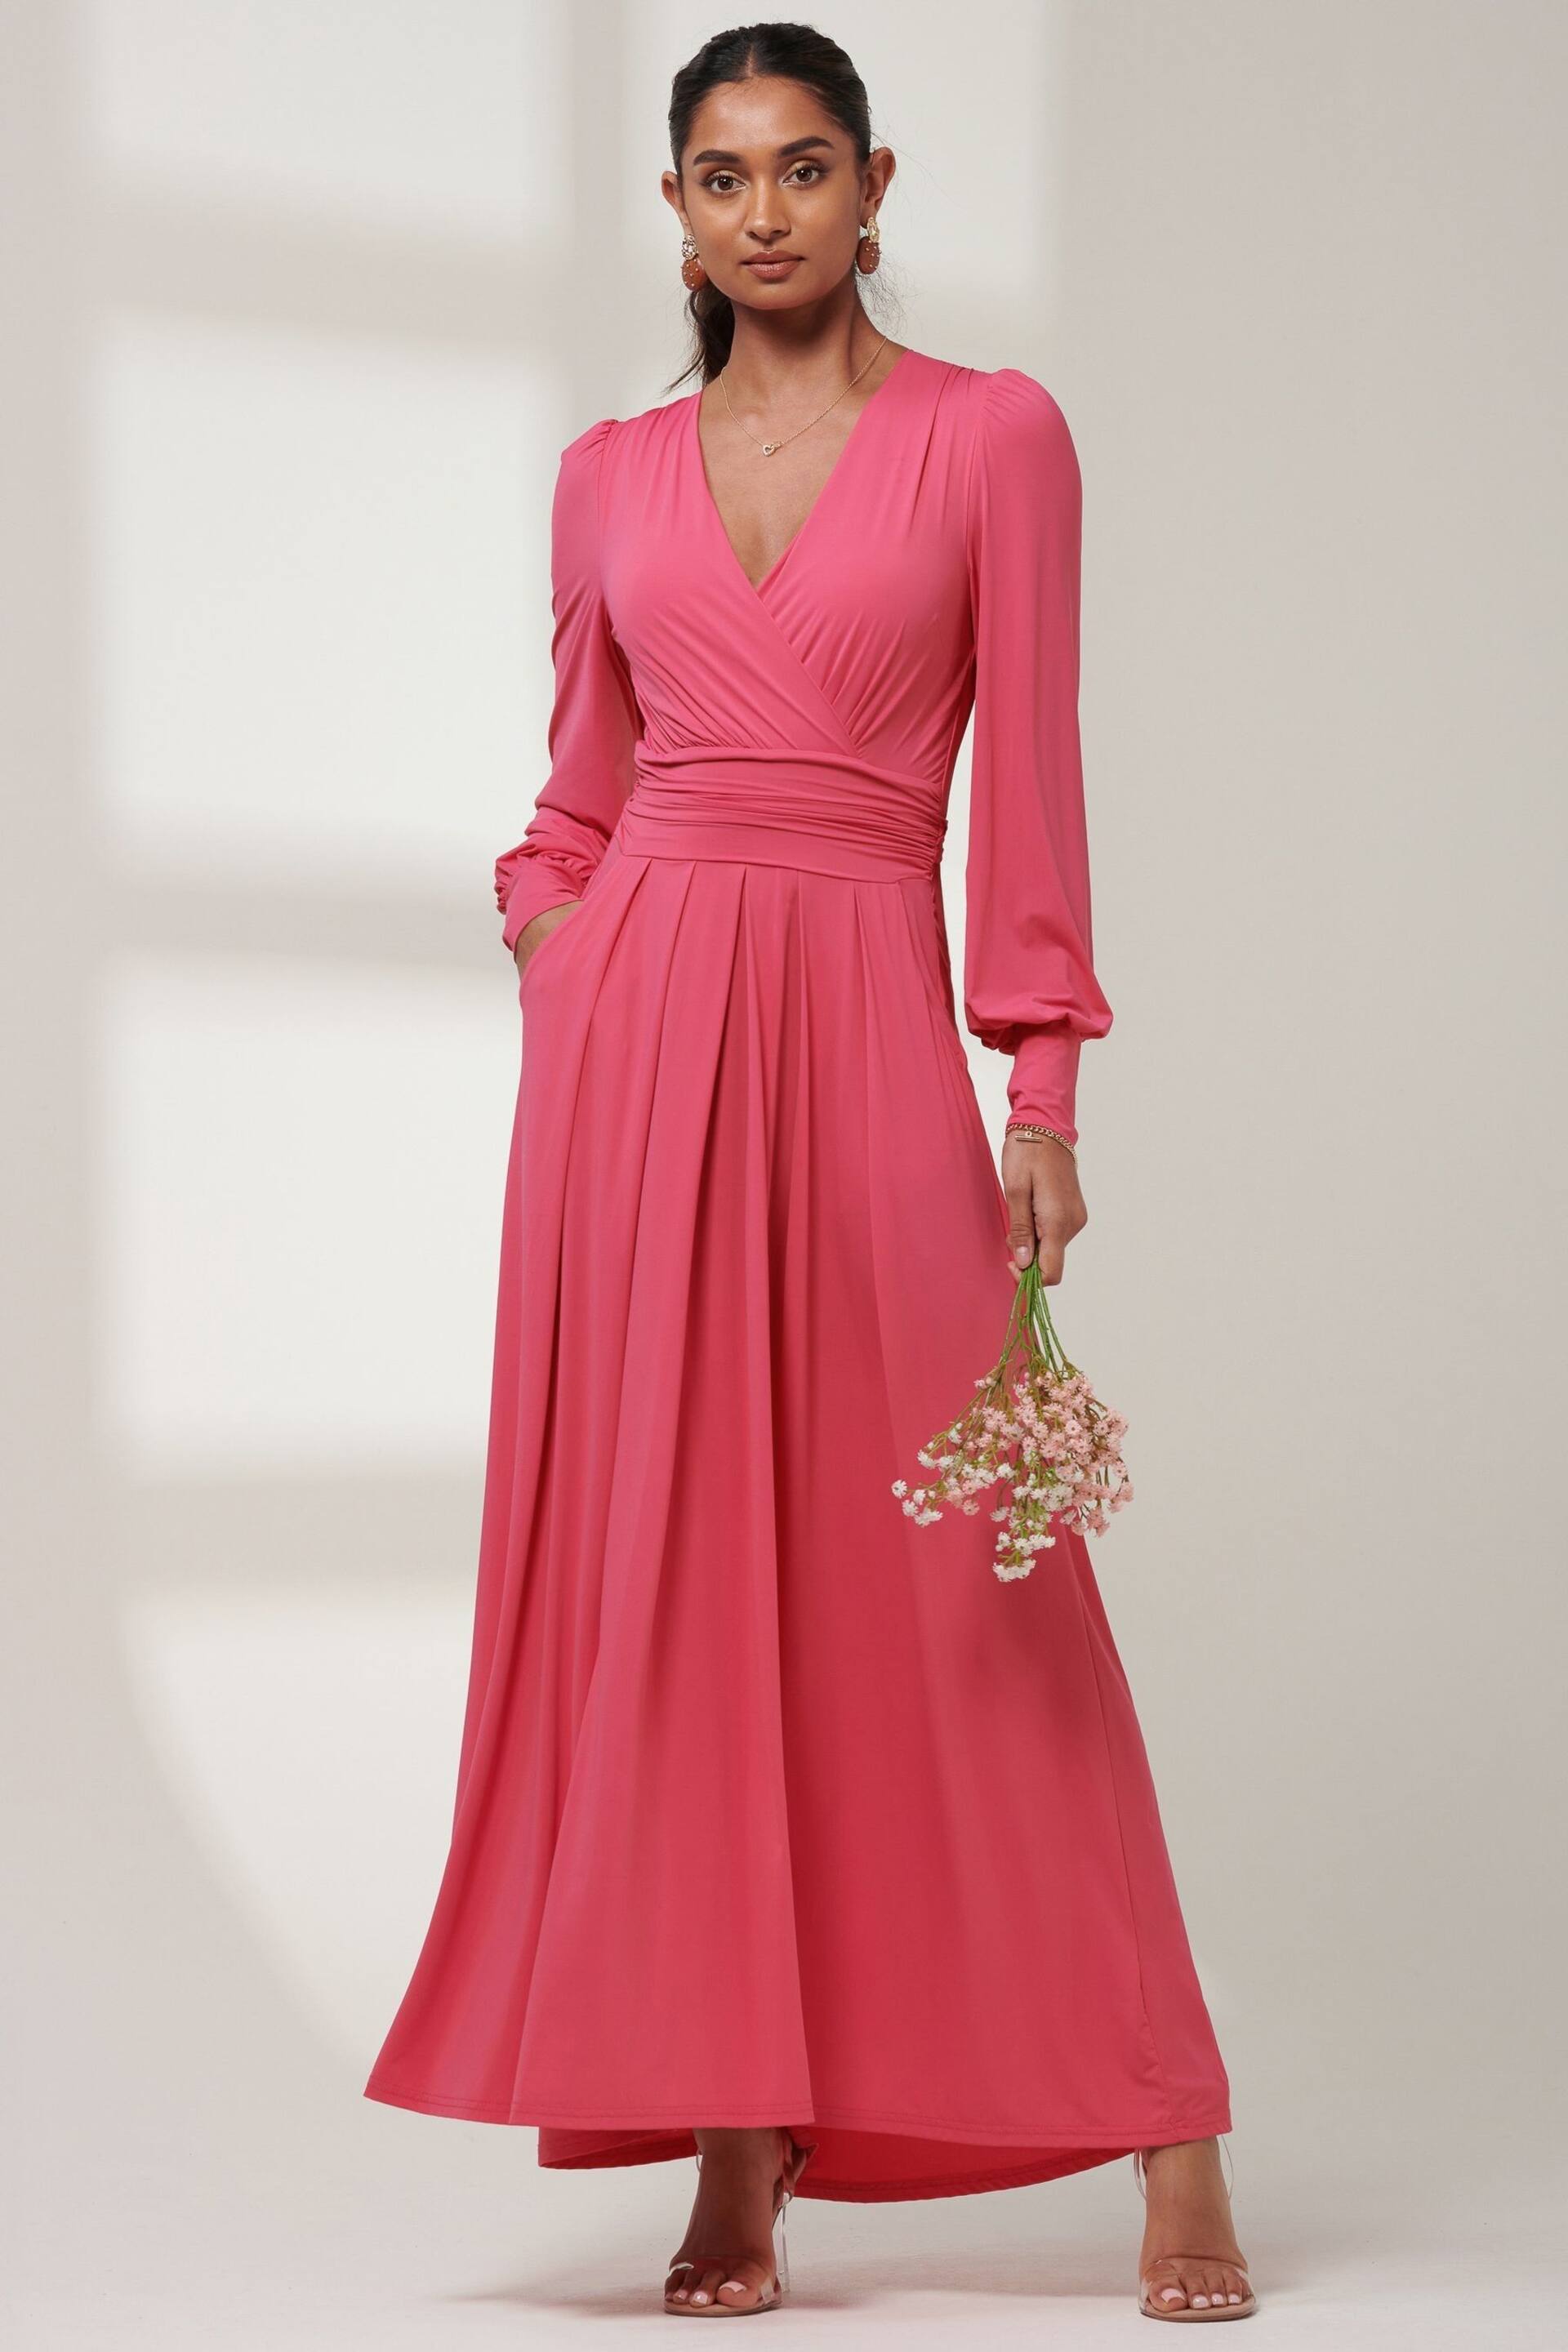 Jolie Moi Pink Giulia Long Sleeve Maxi Dress - Image 6 of 6